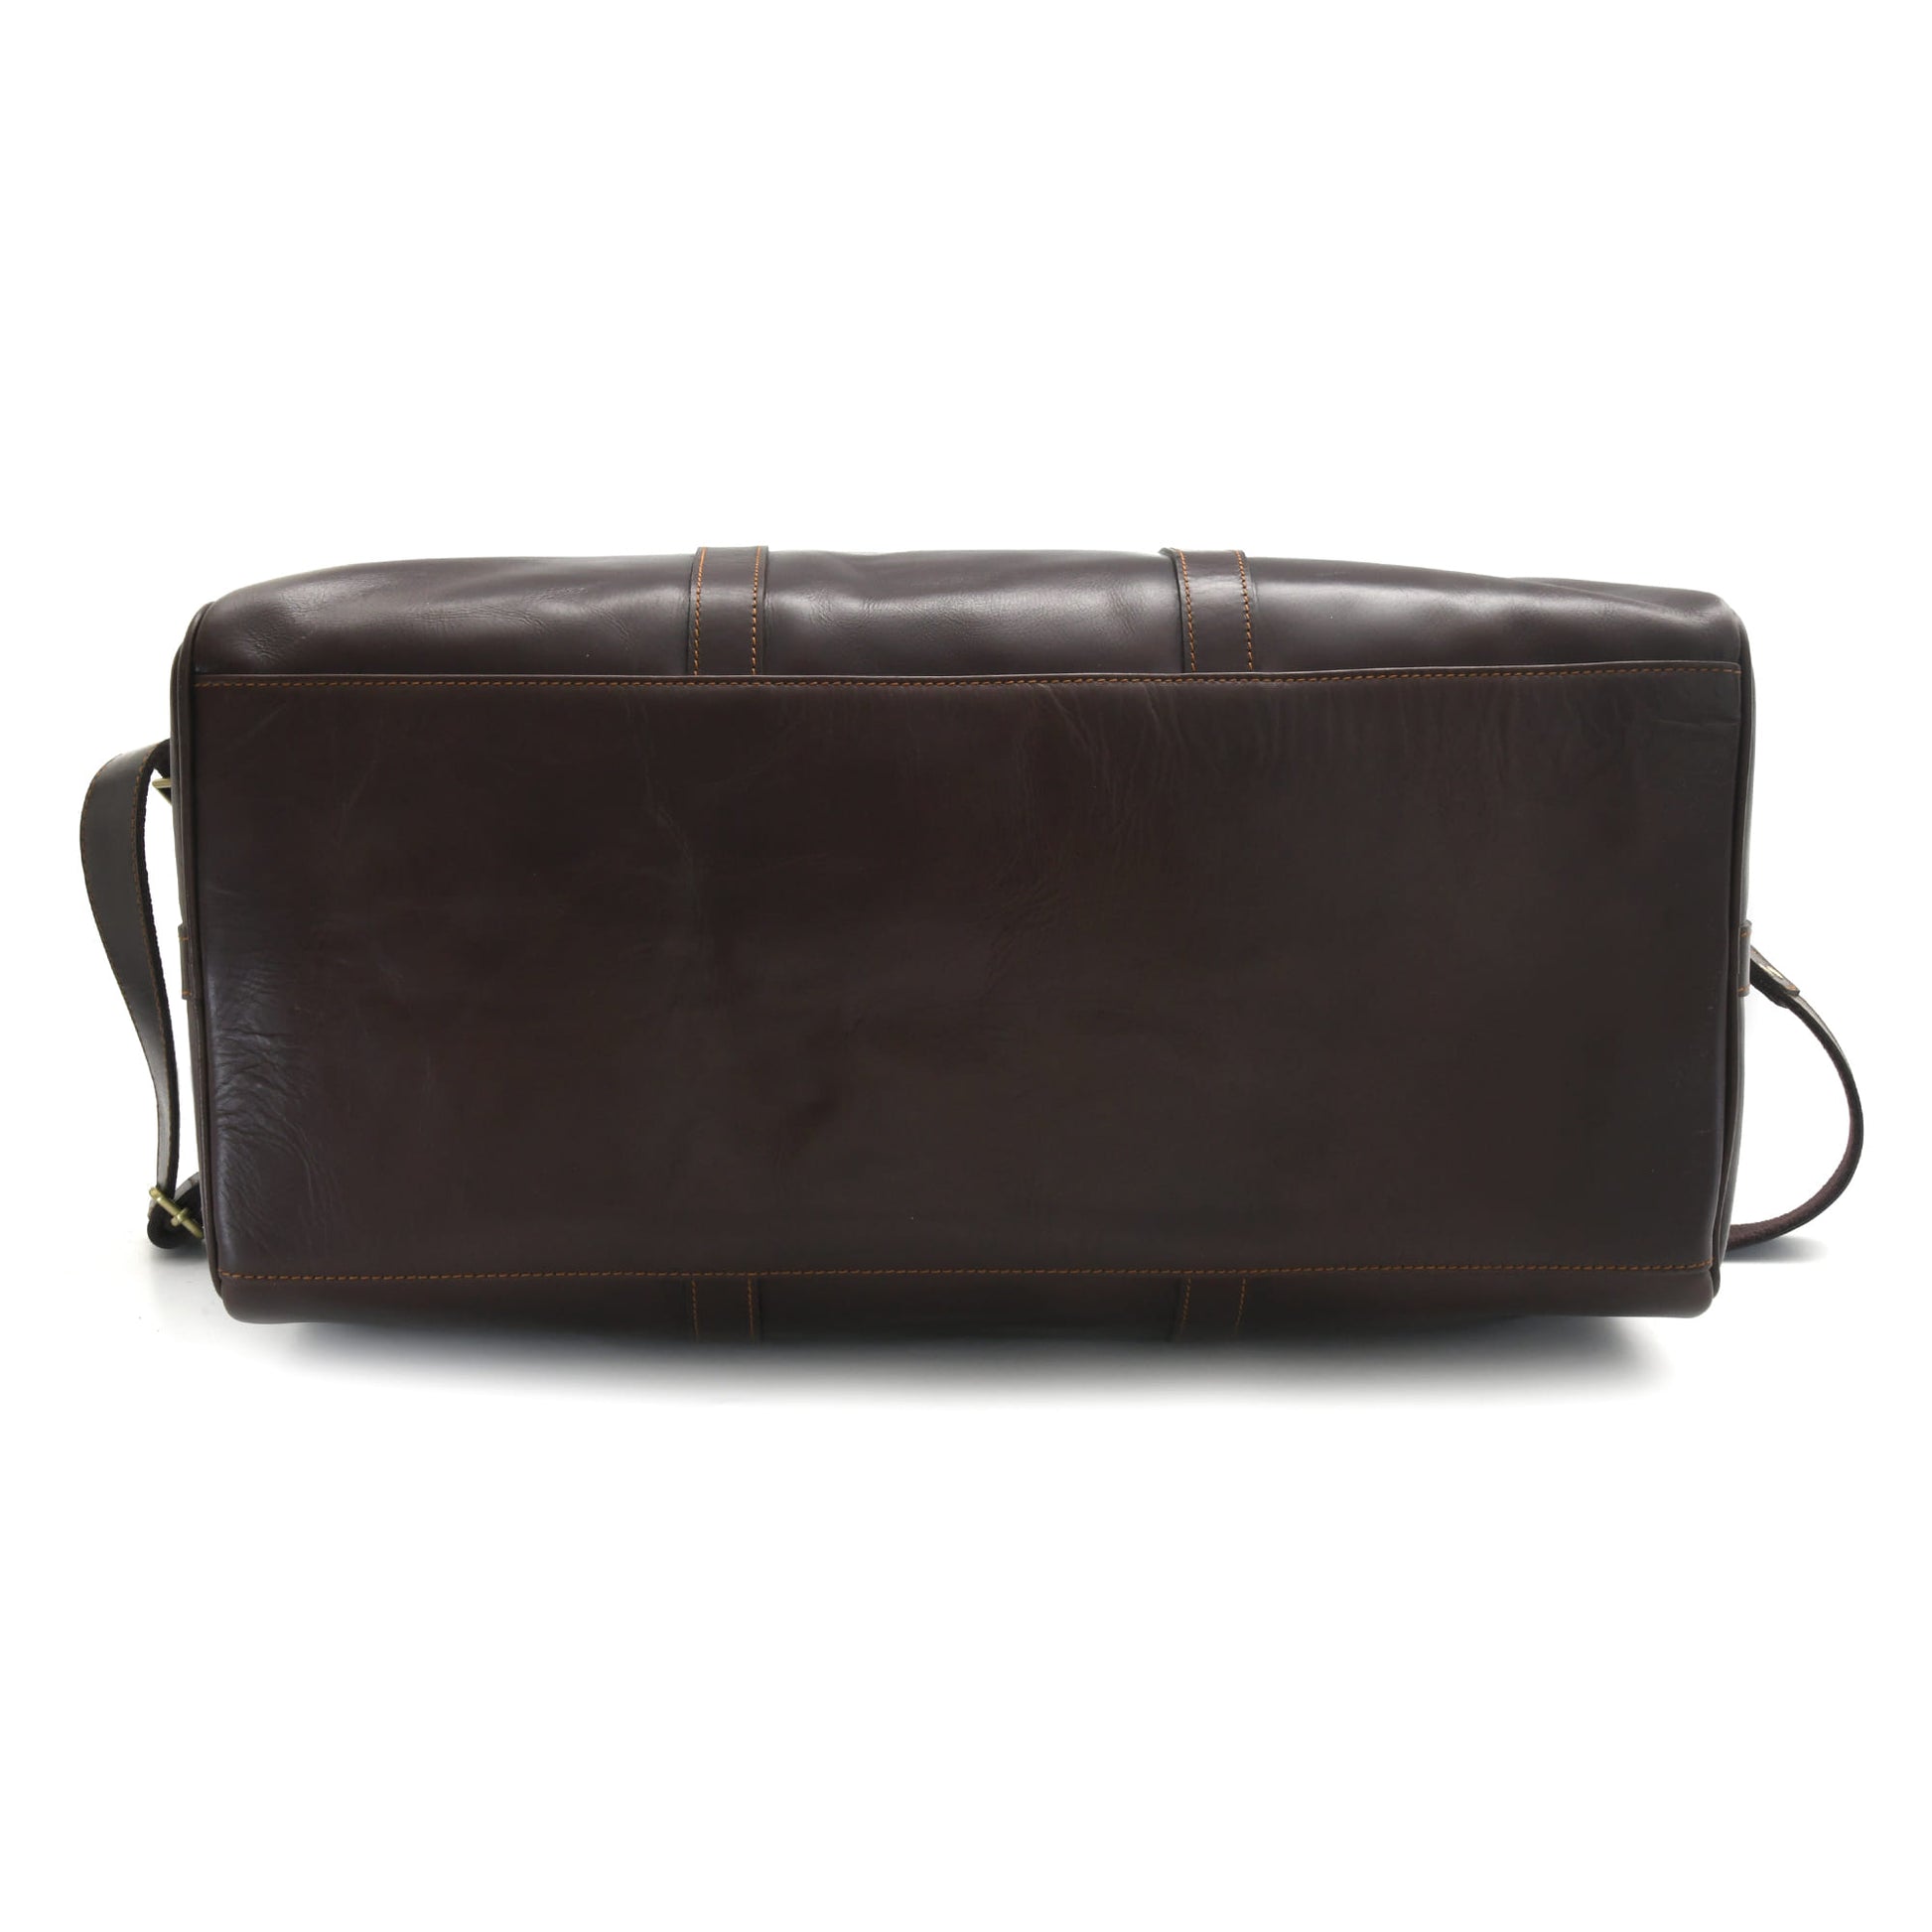 Style n Craft 392101 Duffle Bag in Full Grain Dark Brown Leather - Bottom View